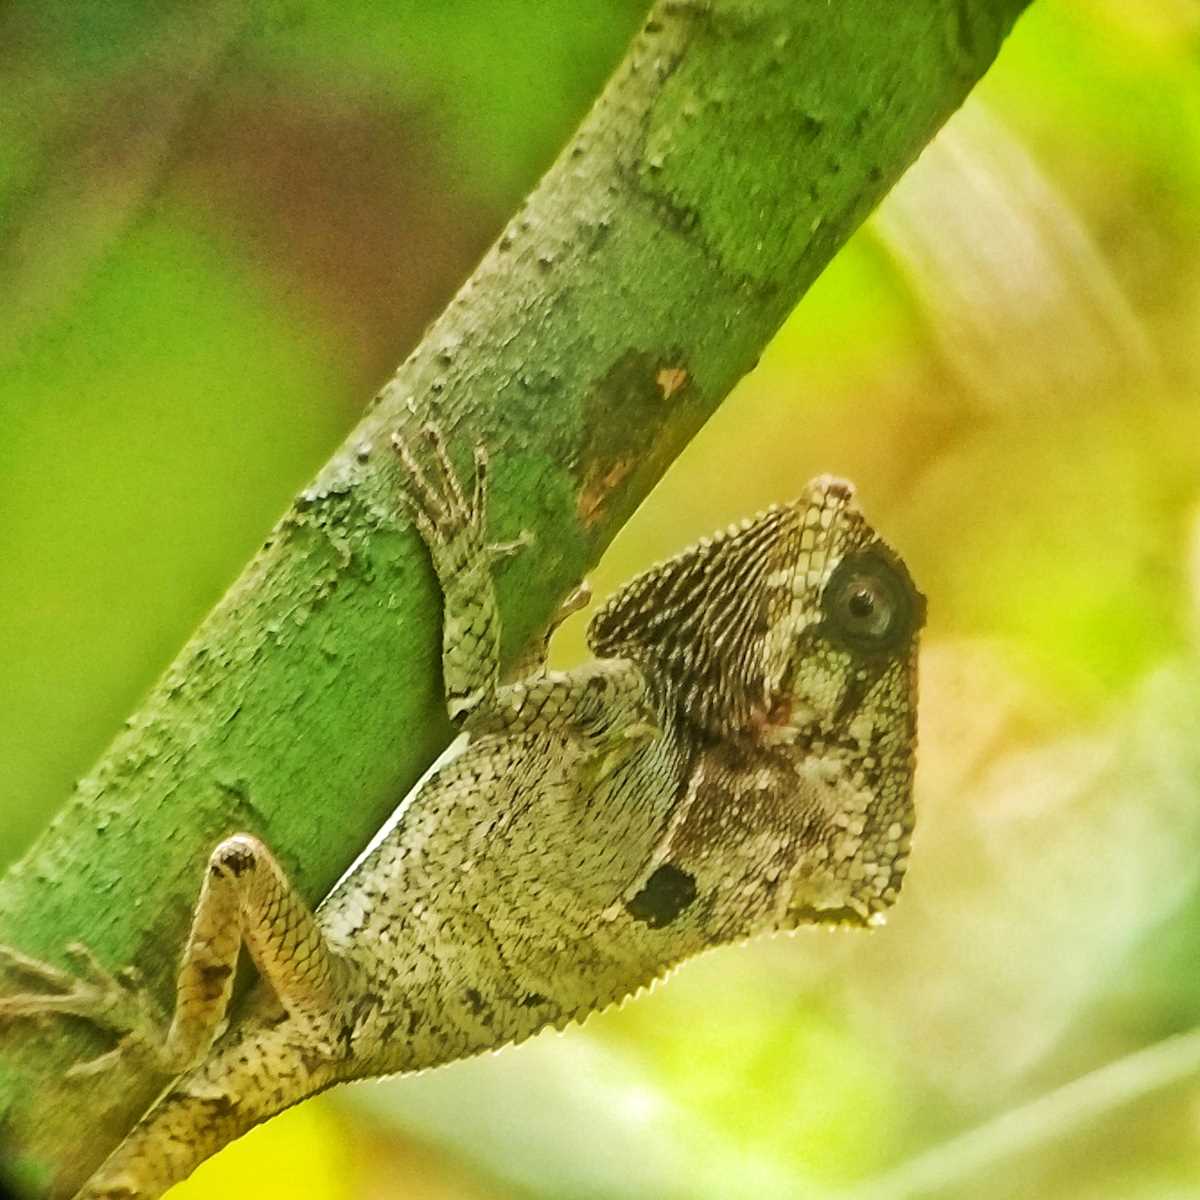 Tierbeobachtungen im Manuel Antonio Nationalpark in Costa Rica